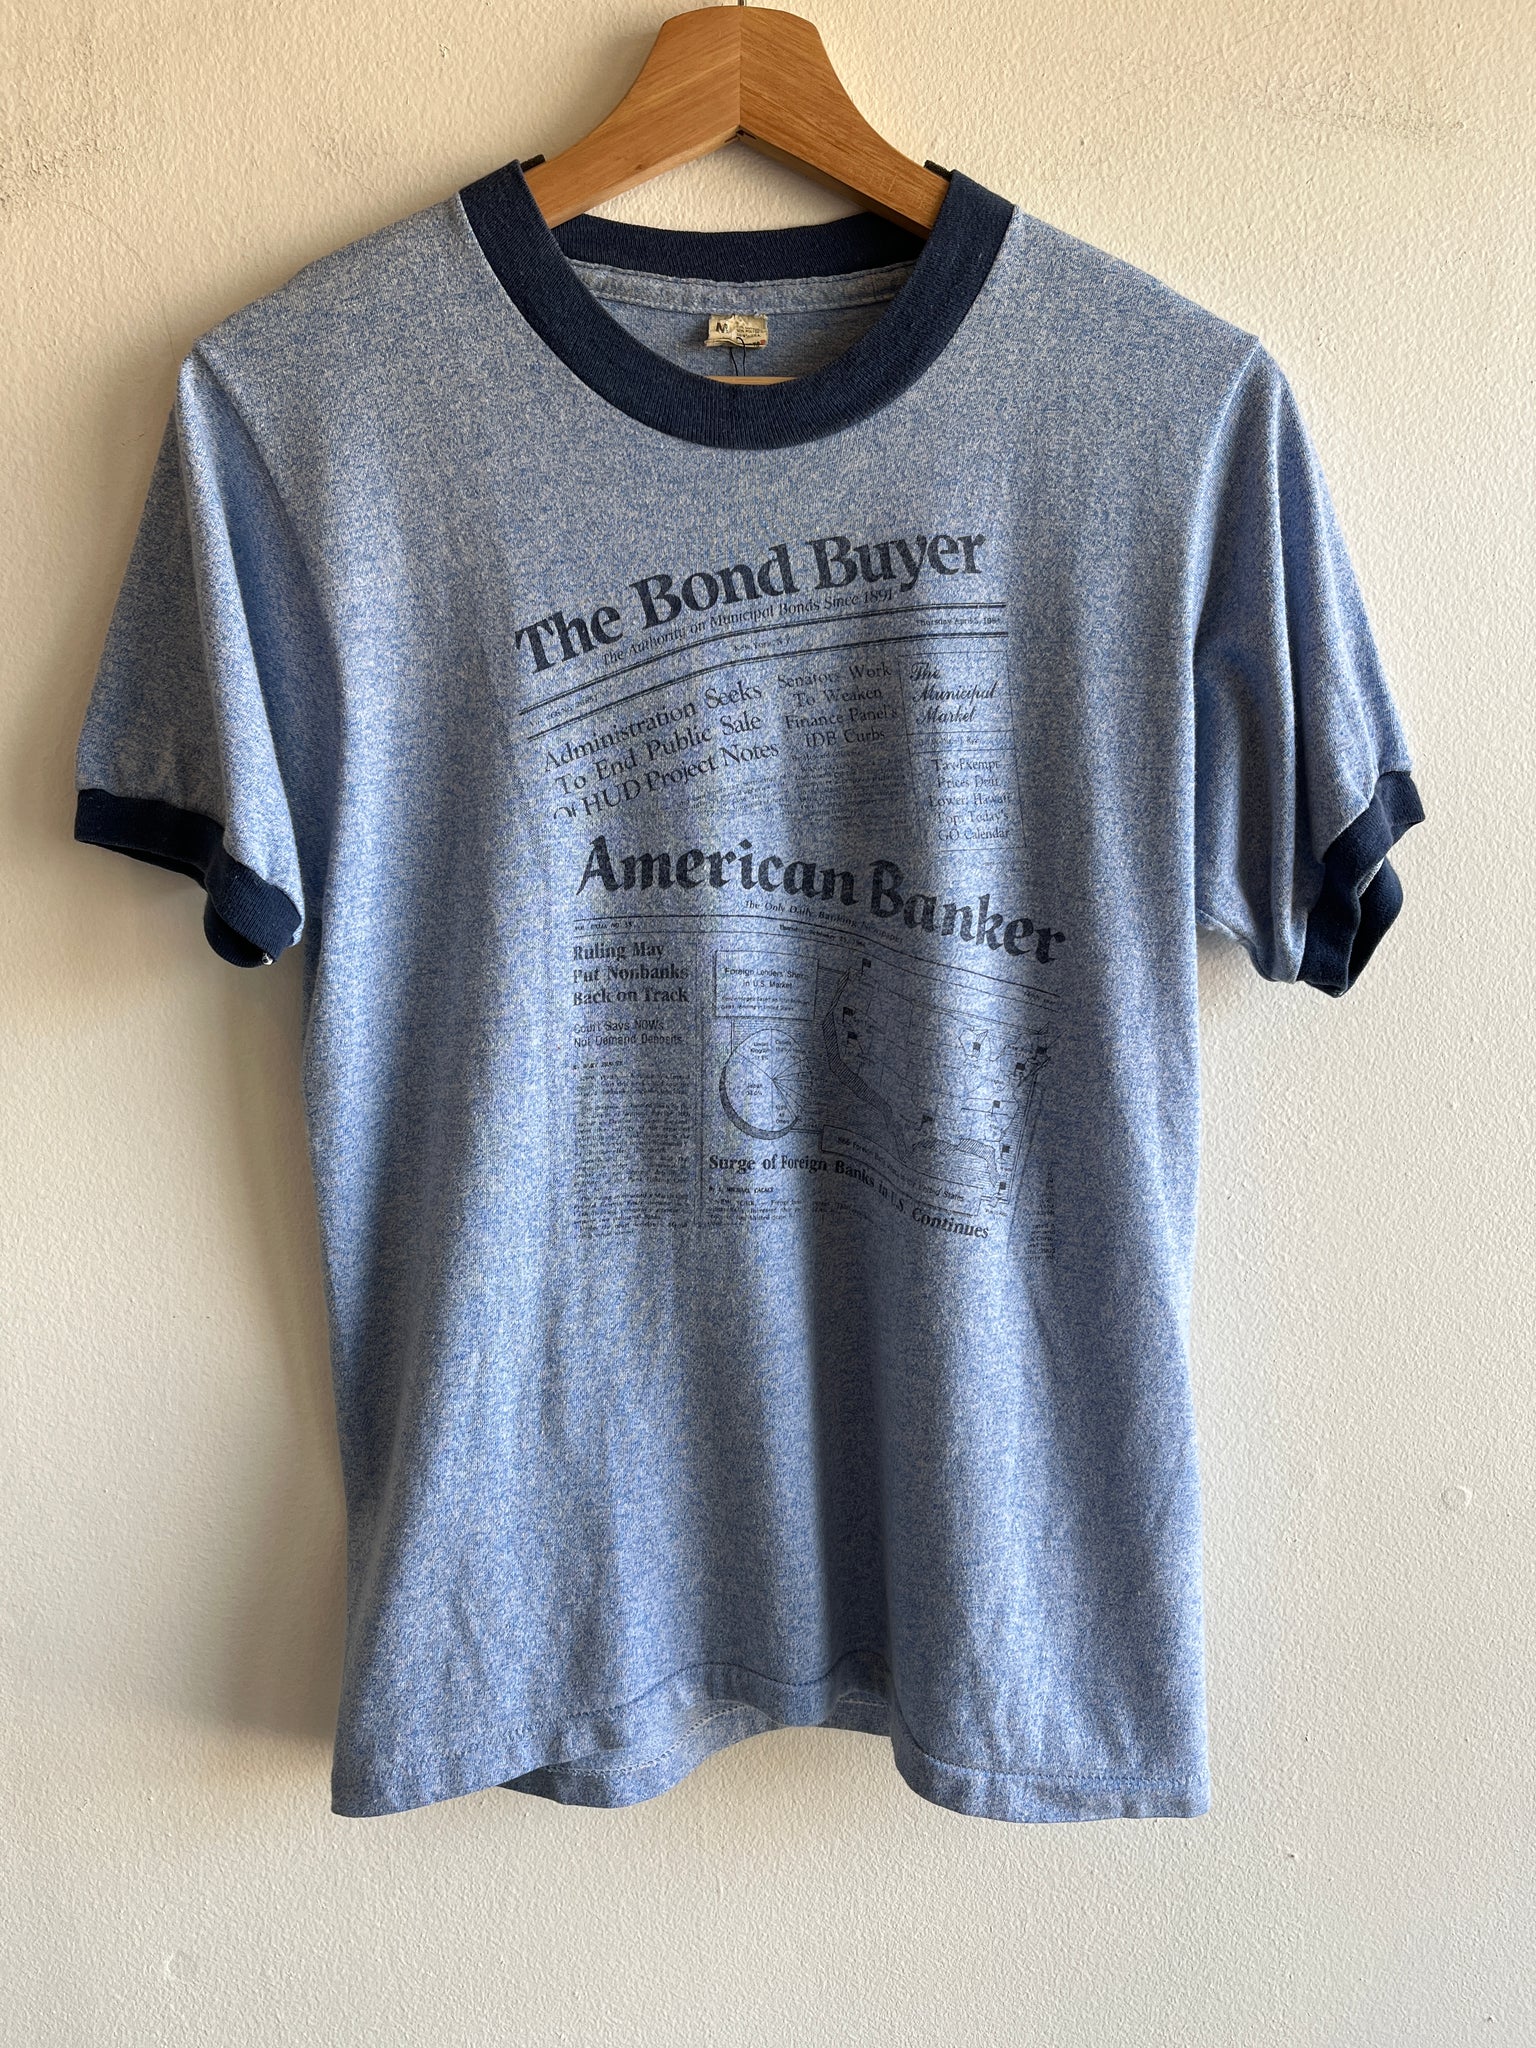 Vintage 1980’s Bond Buyer Ringer T-Shirt